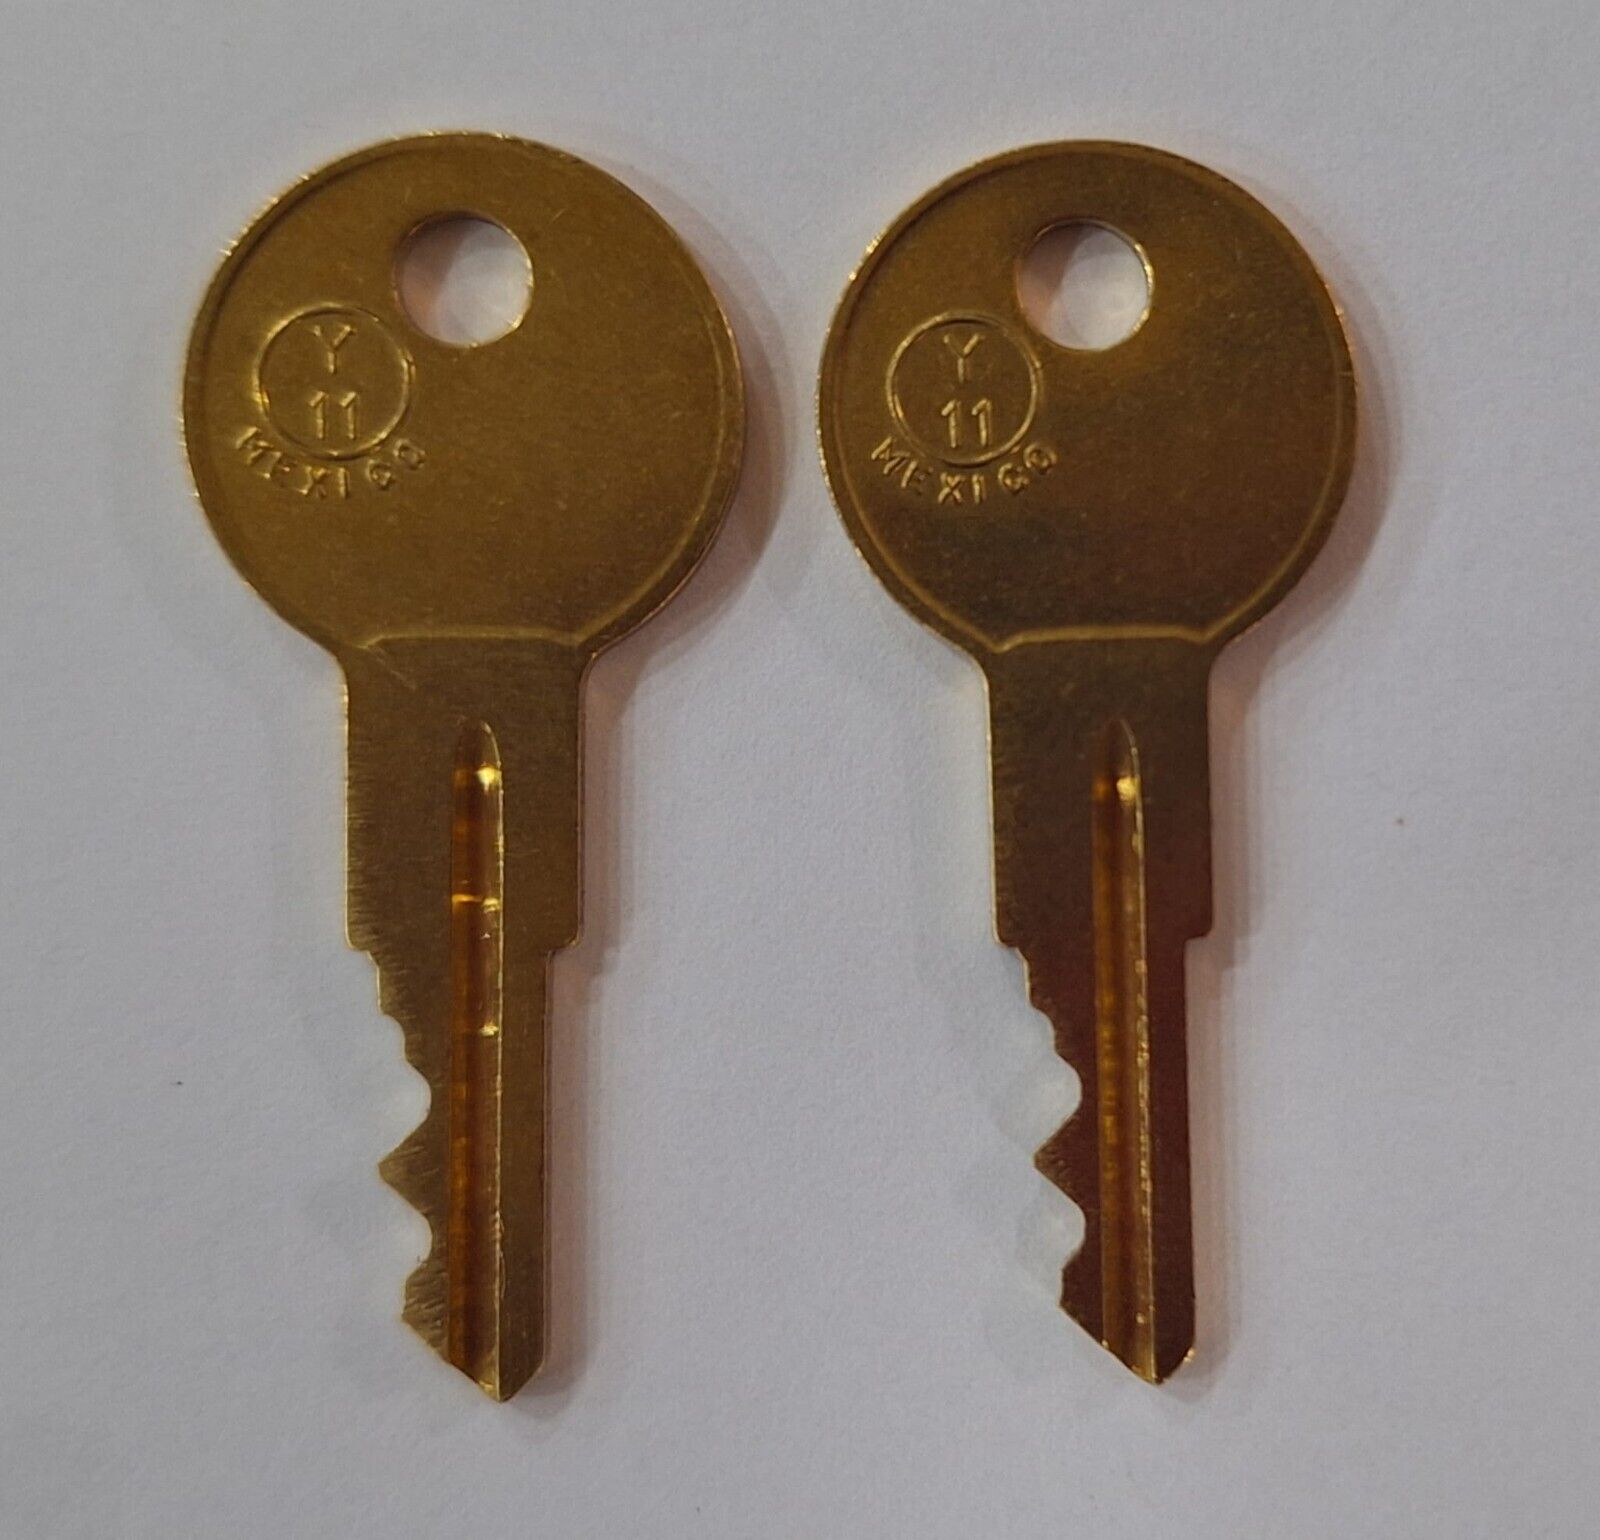 159E Two Keys for Hon / ESP File Cabinet, Desk, Office Furniture cut to key code